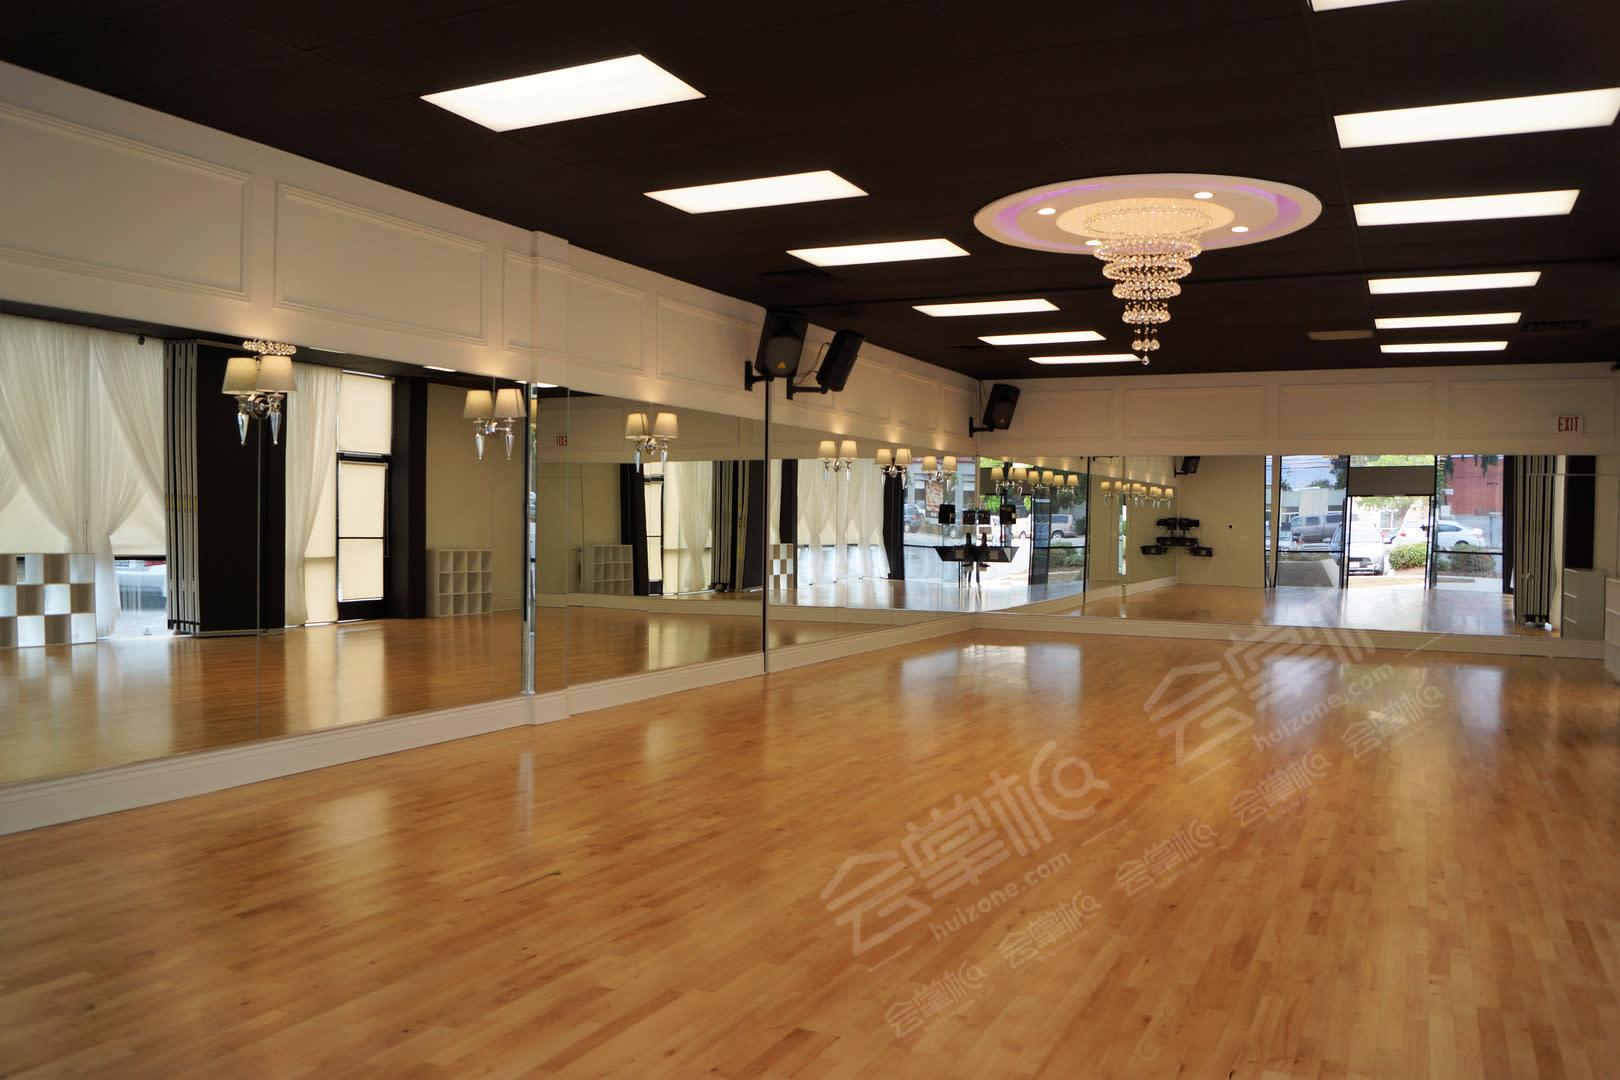 Room 1 + 2 - Dance Studio/Production/Event/Fitness Space in Burbank